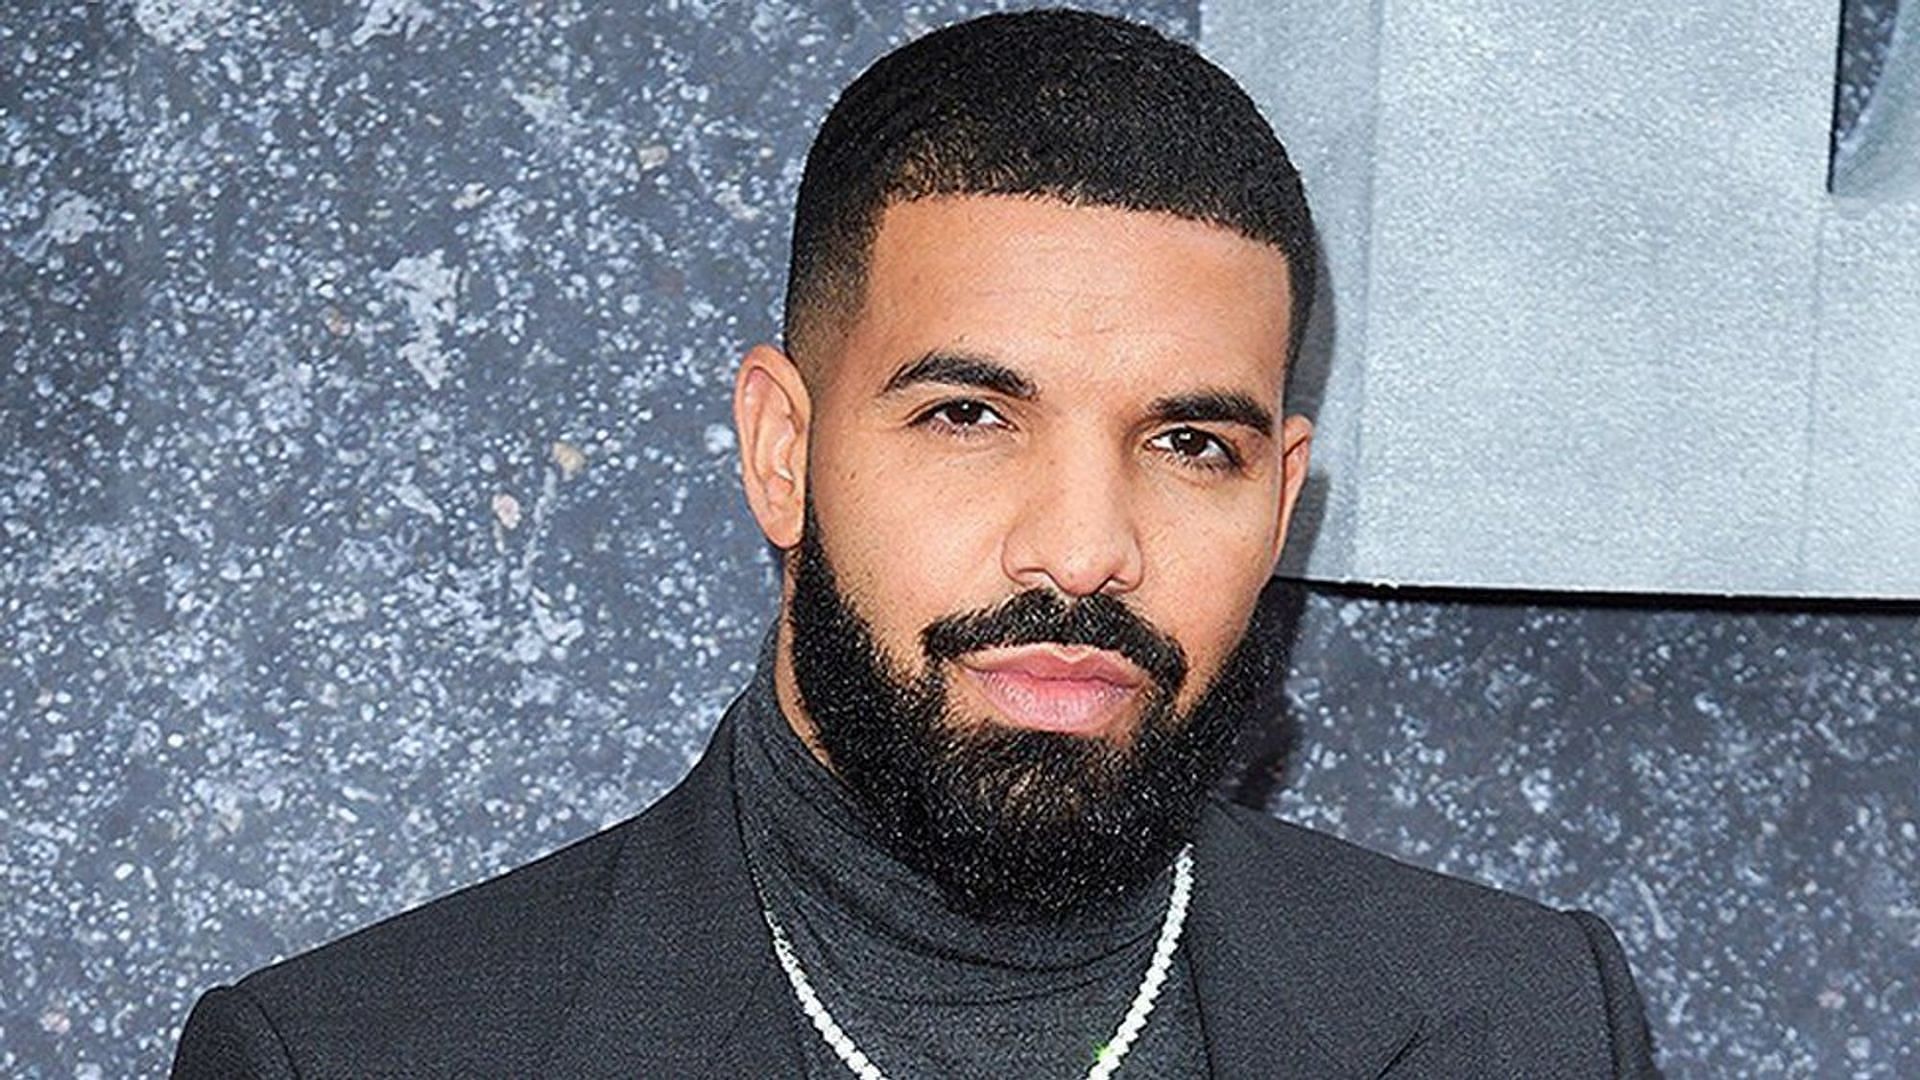 Rumors of Drake getting arrested in Sweden flood the internet (Image via Getty Images)